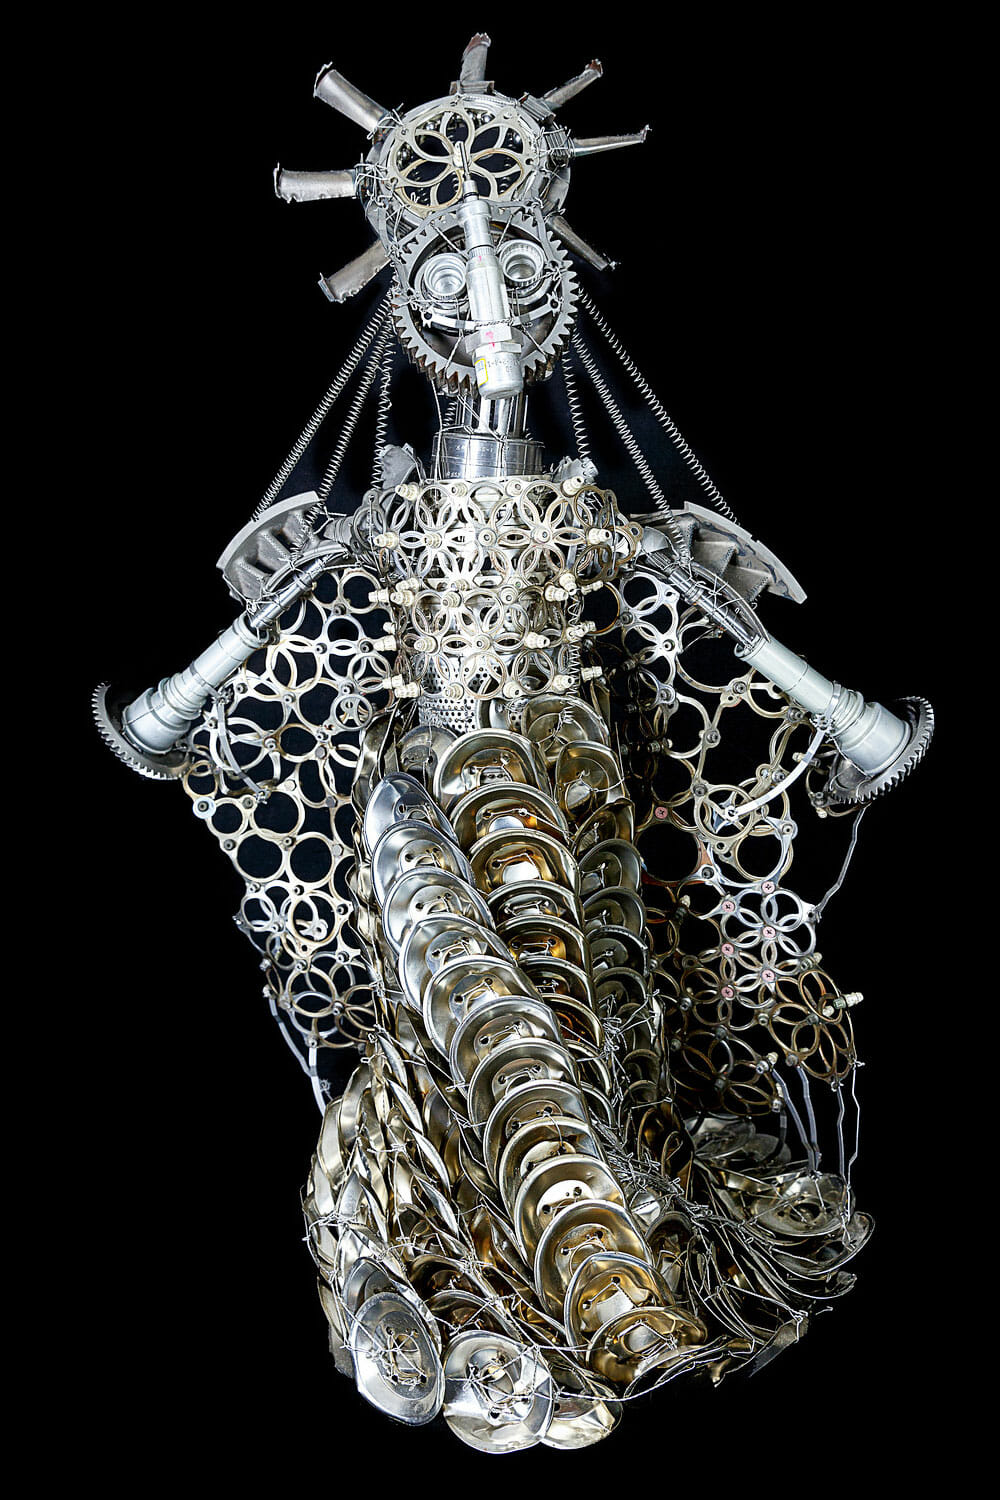 Alan Reullier - Robots sculptures Category